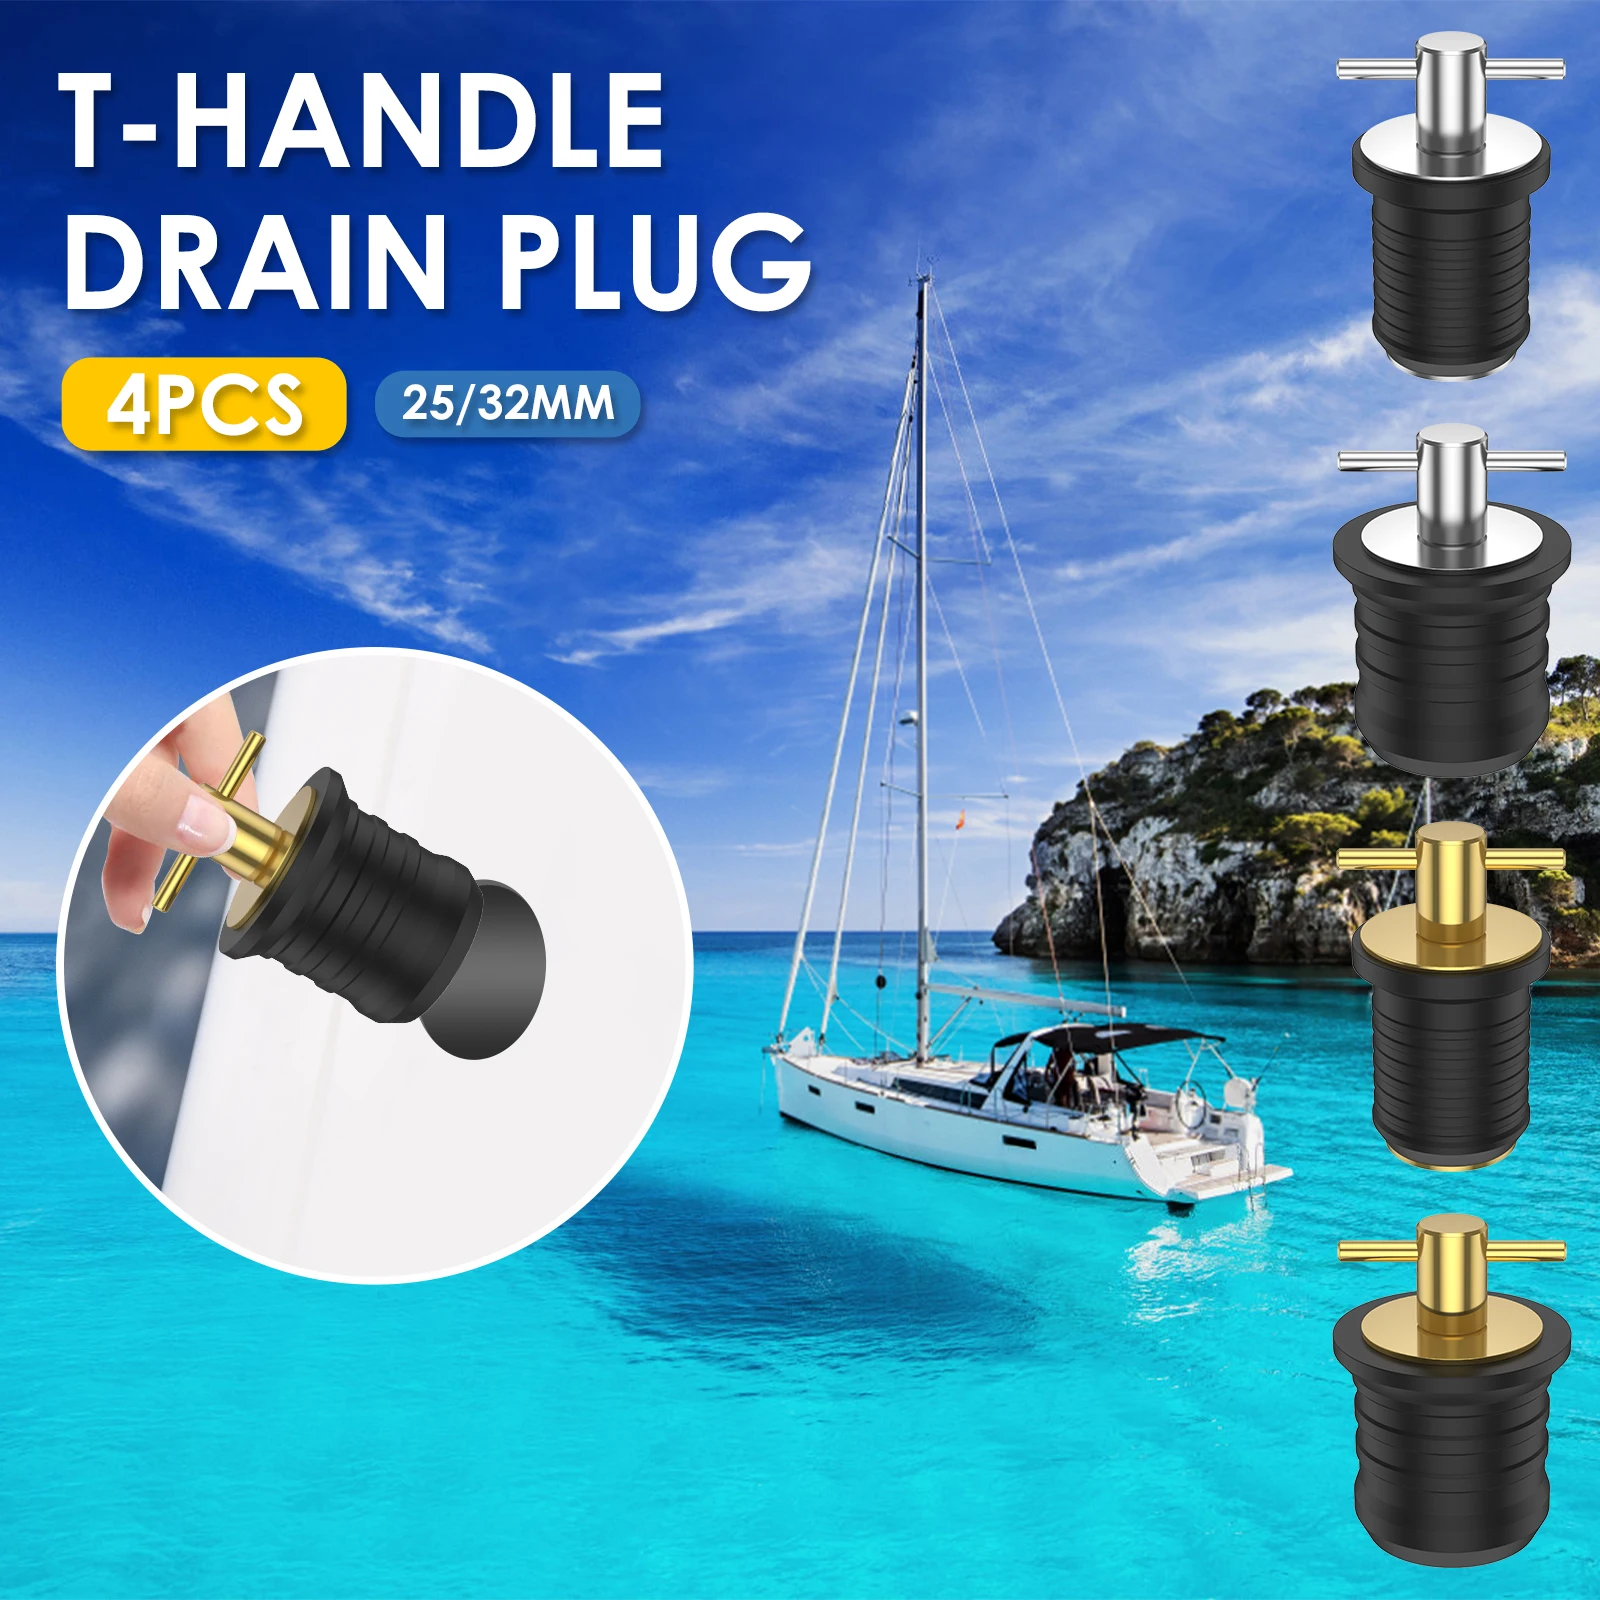 

4Pcs T-Handle Drain Plug 25/32mm Metal Marine Boat Drain Plug Boat Rubber Plug Brass Boat Drain Twist Plug Sturdy Marine Boat